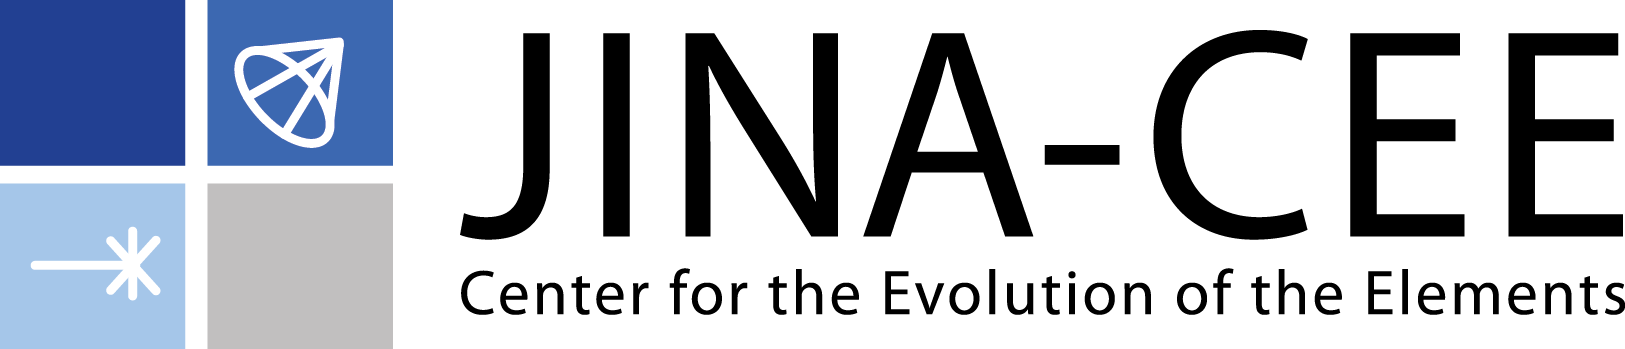 JINA-CEE logo